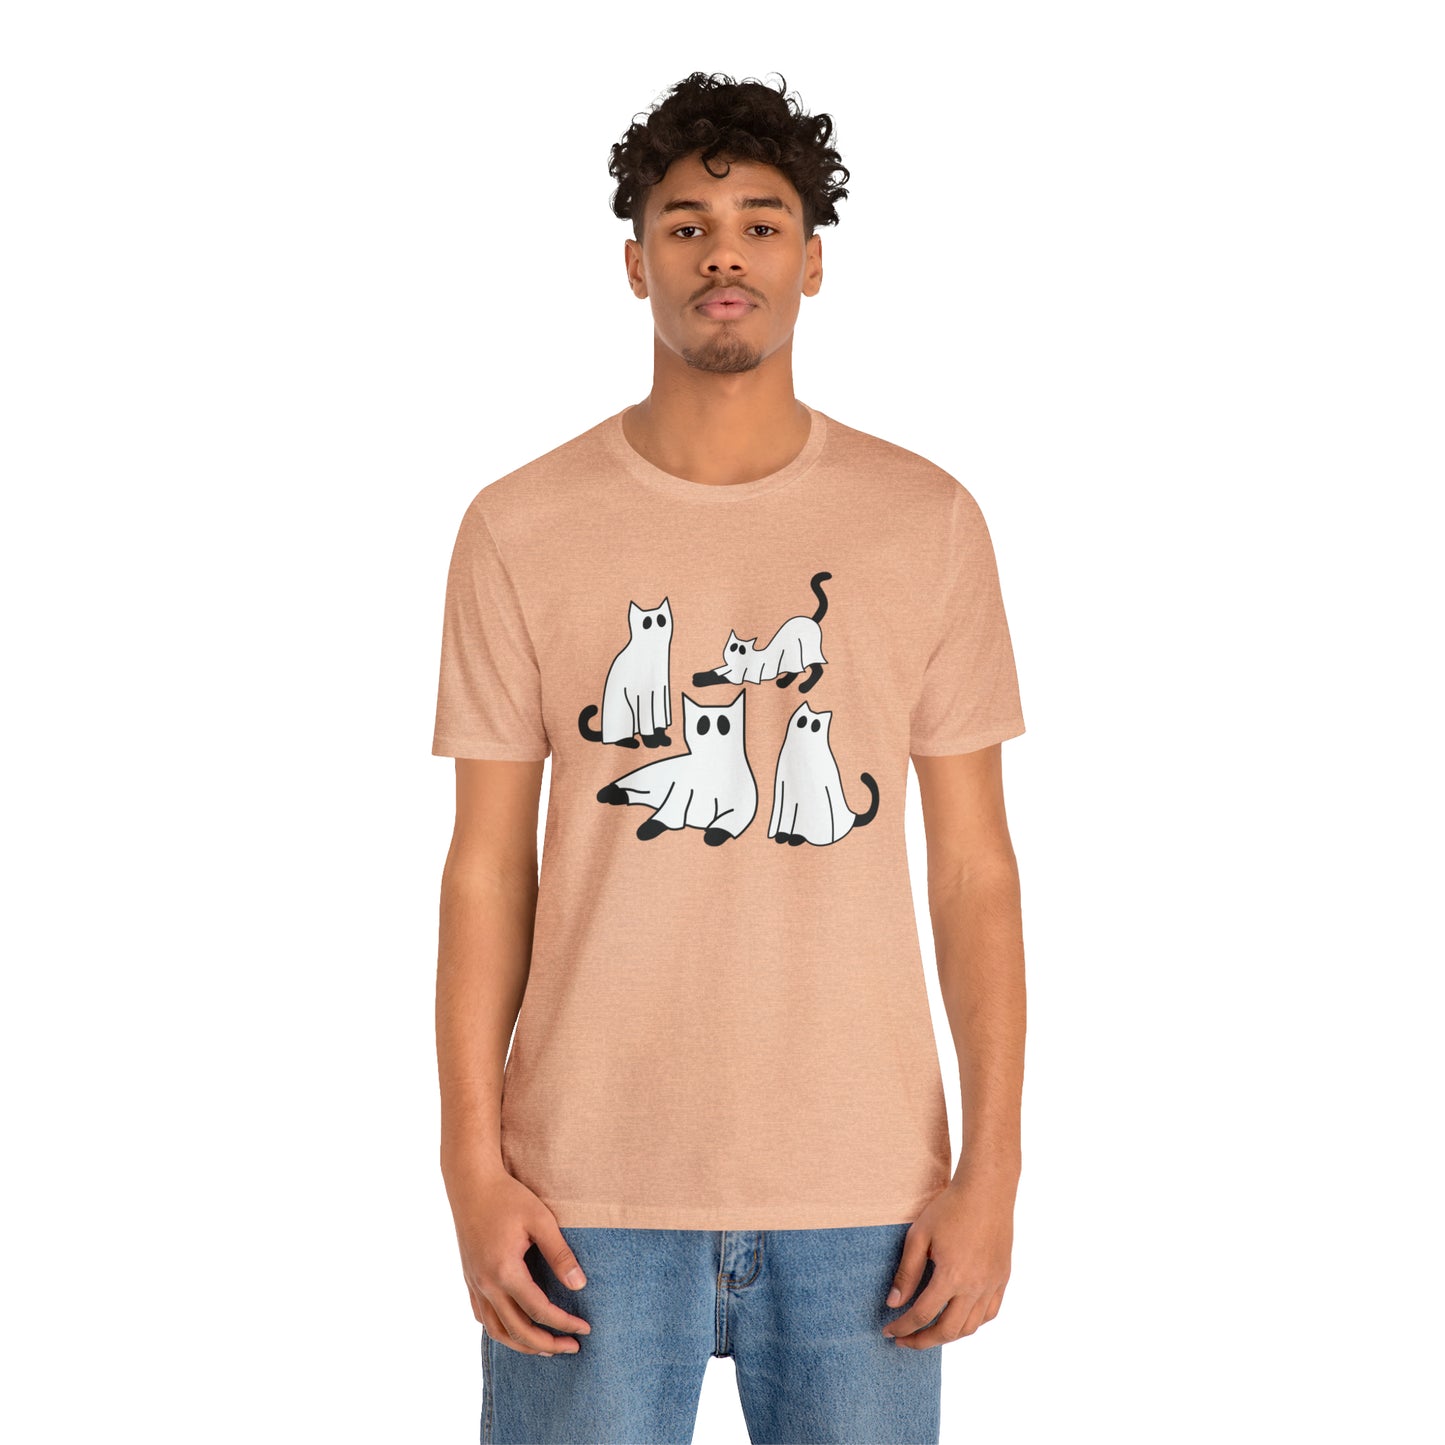 Cat Halloween tshirt, Ghost Halloween Shirt, Ghost Cat Shirt, Fall tshirt for Women, T525